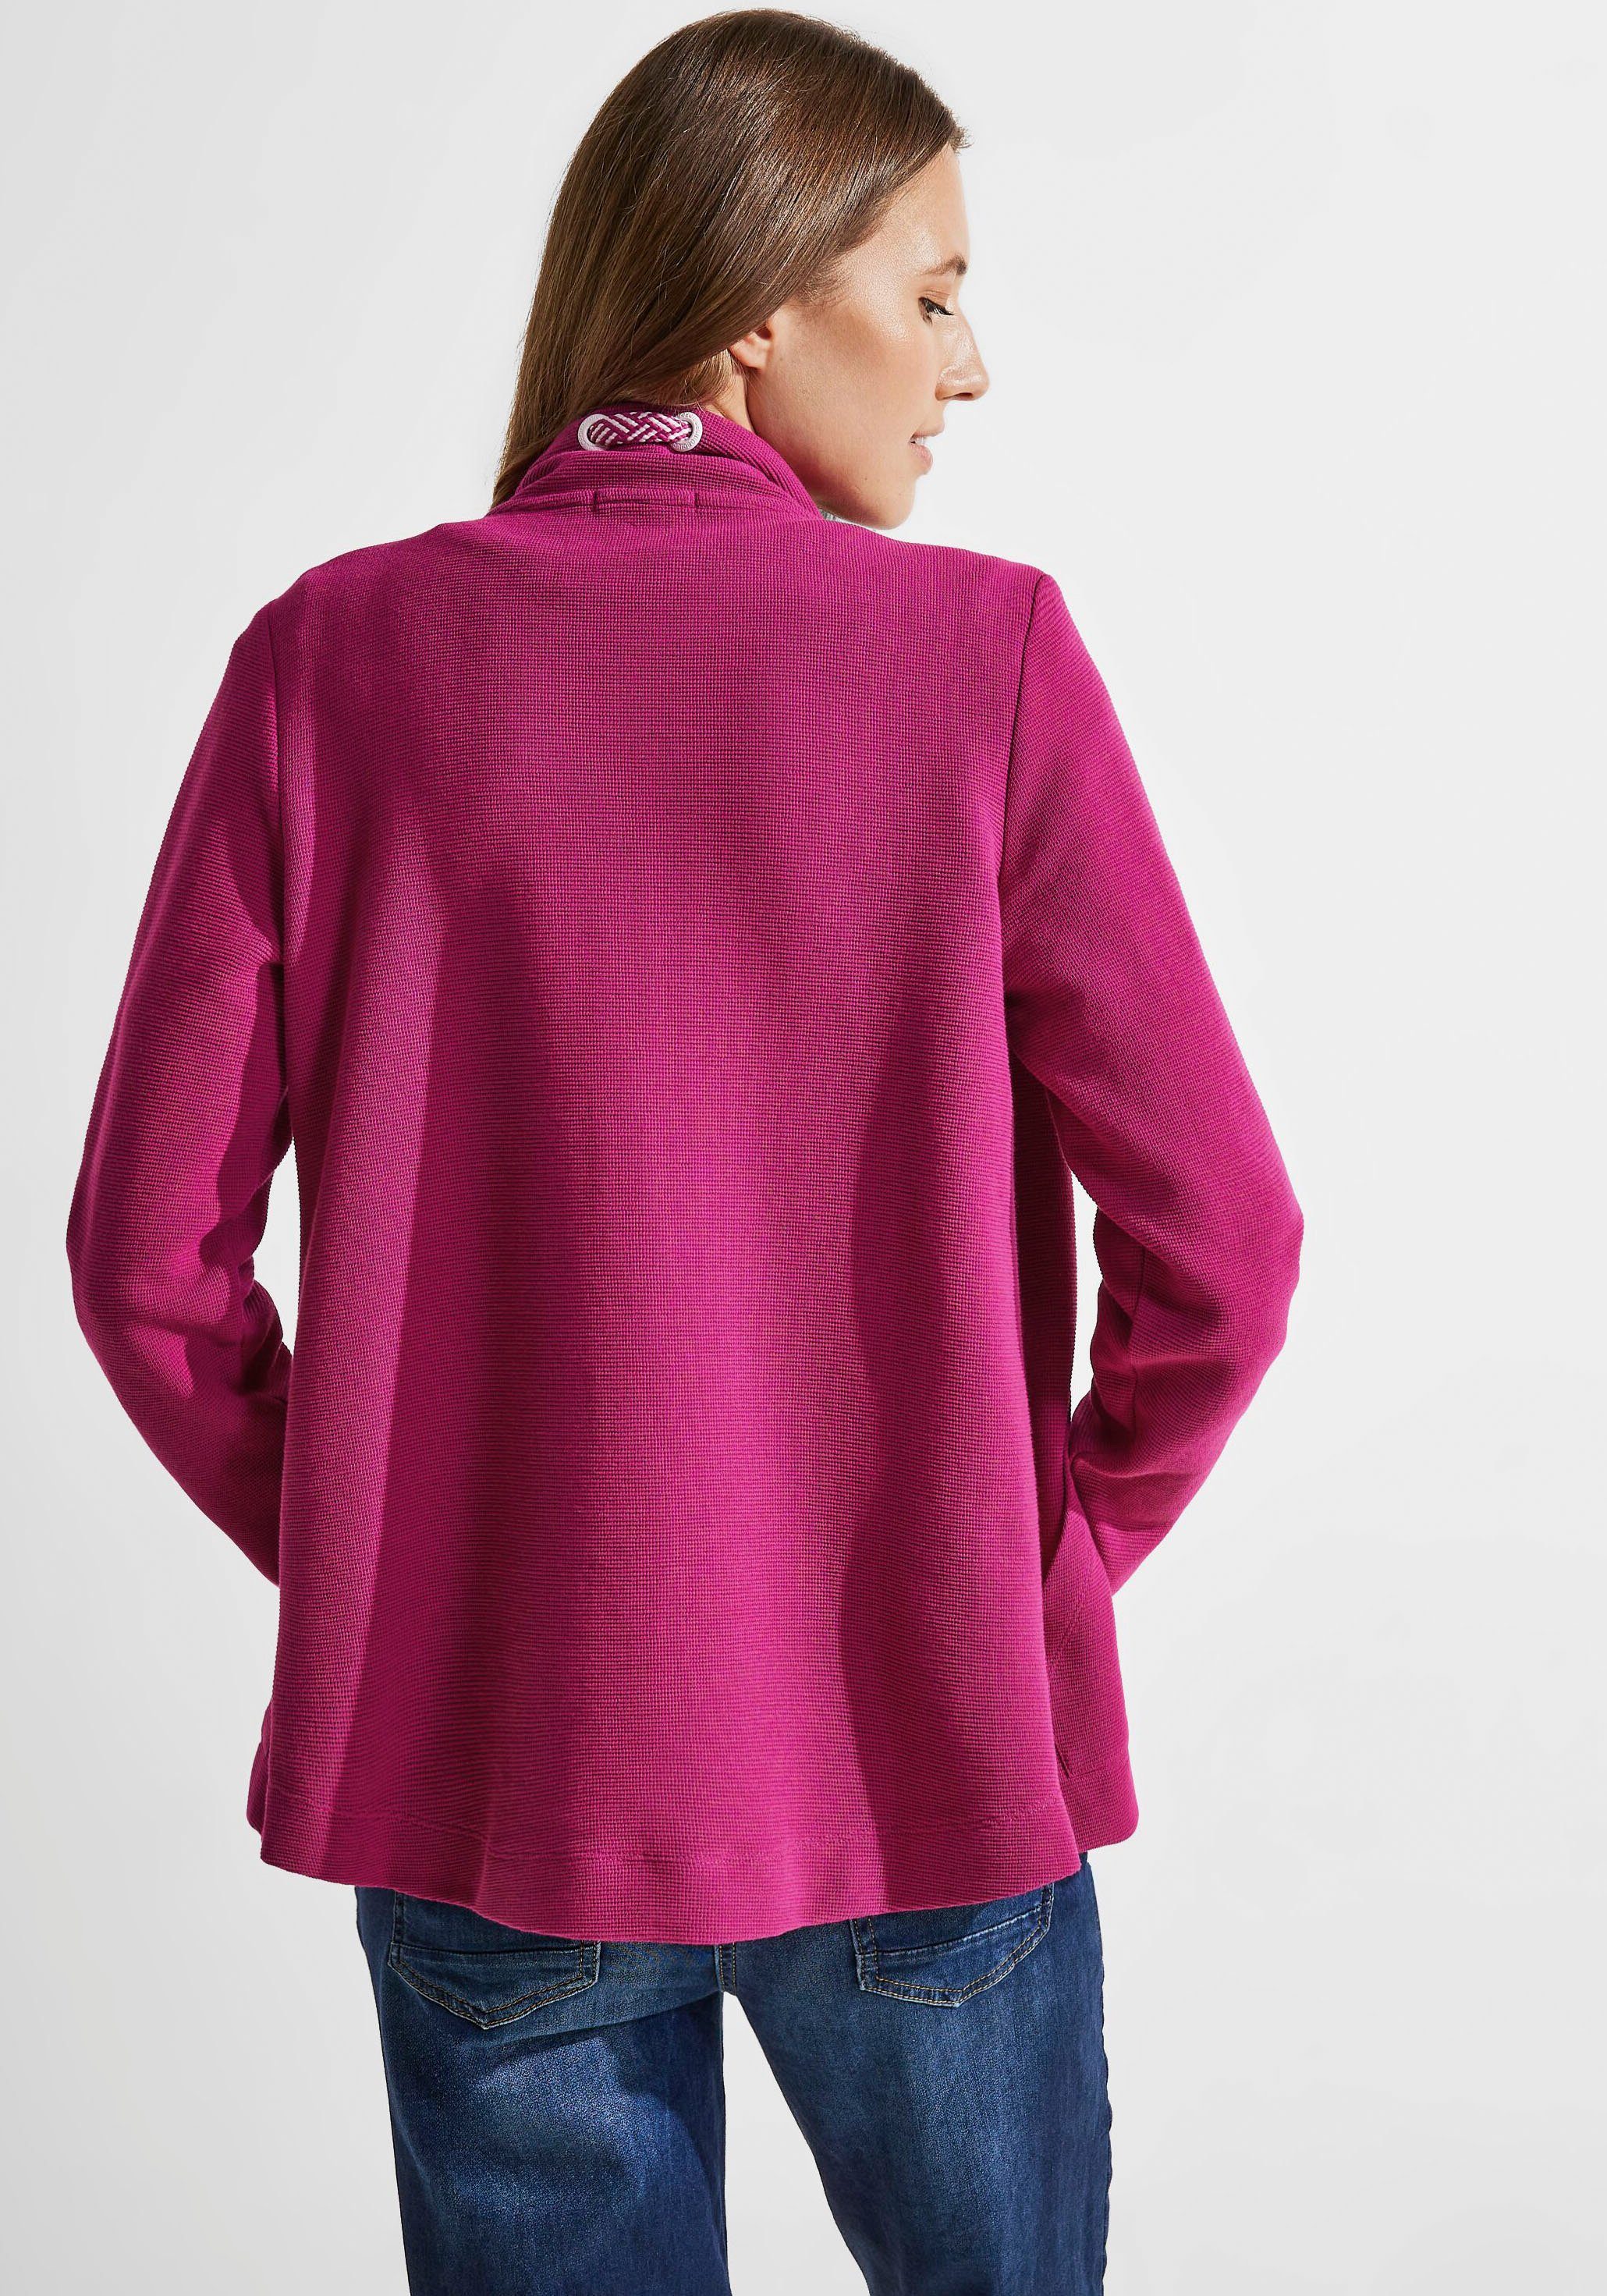 Shirtjacke Optik mit cool strukturierter Cecil pink